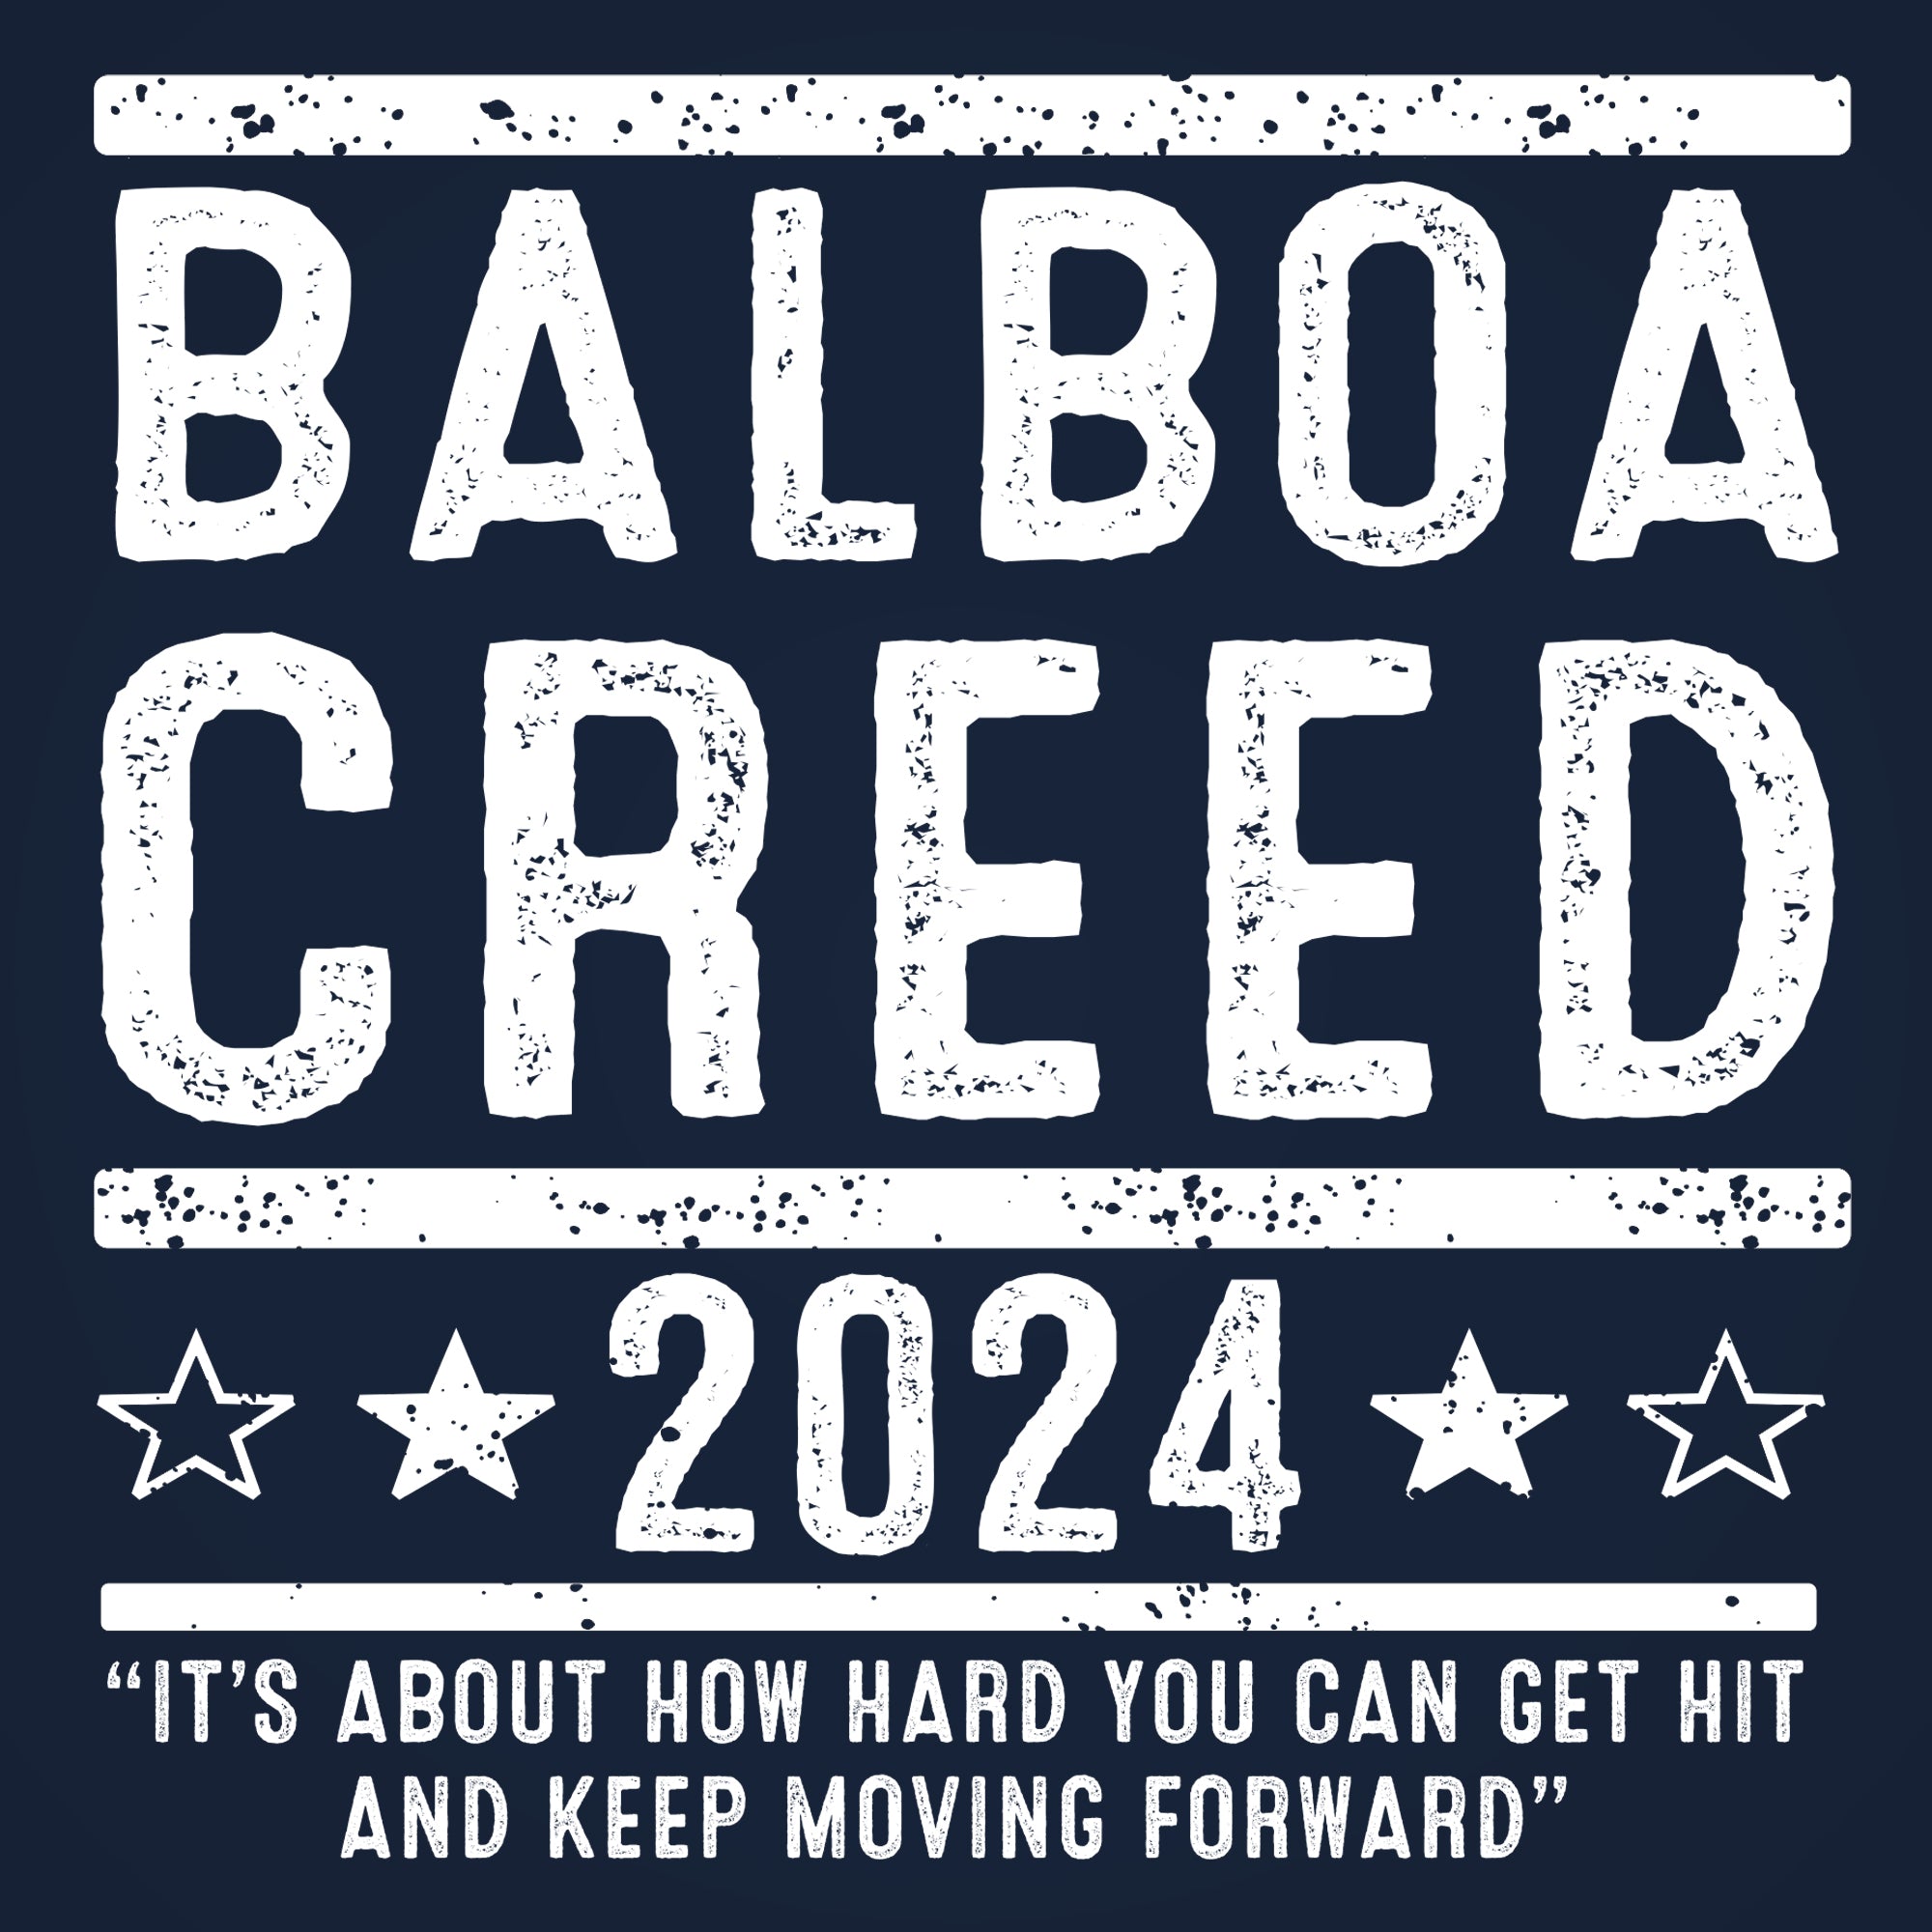 Balboa Creed 2024 Election Tshirt - Donkey Tees